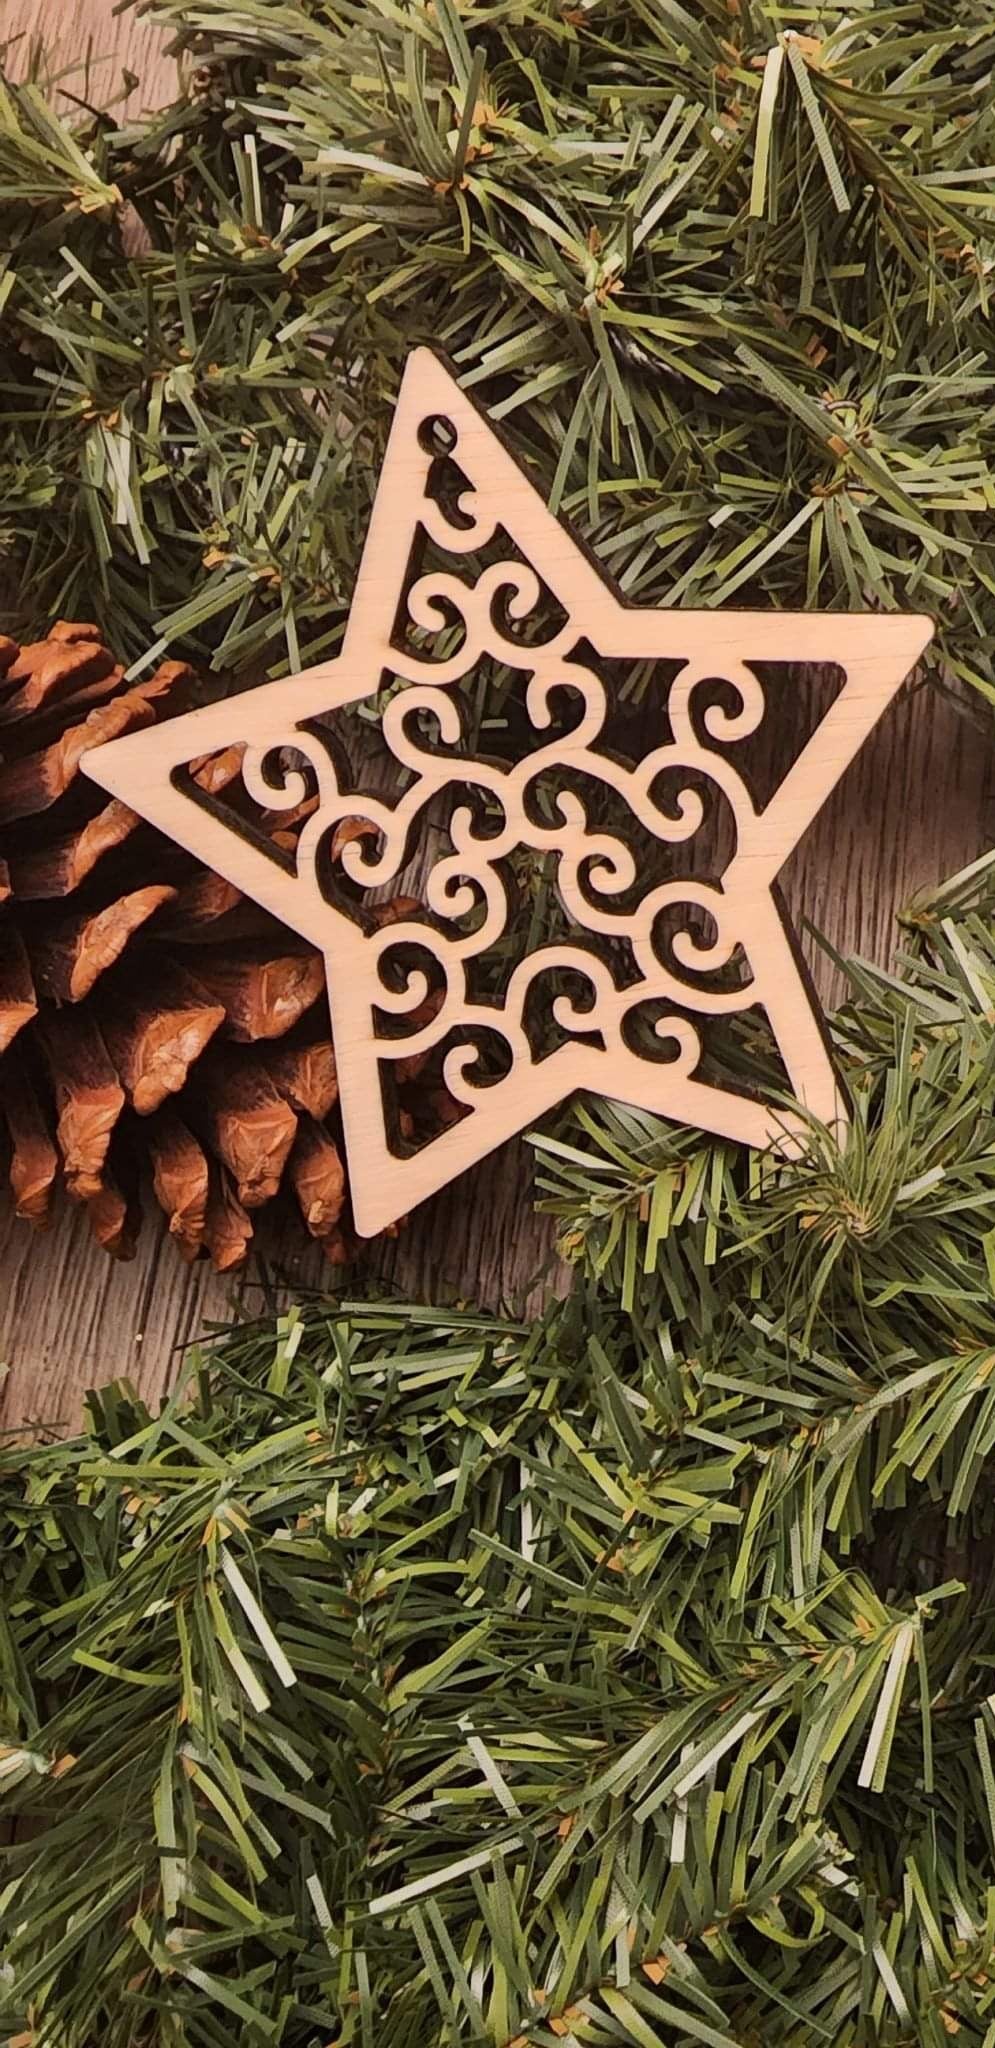 Star Christmas Ornaments